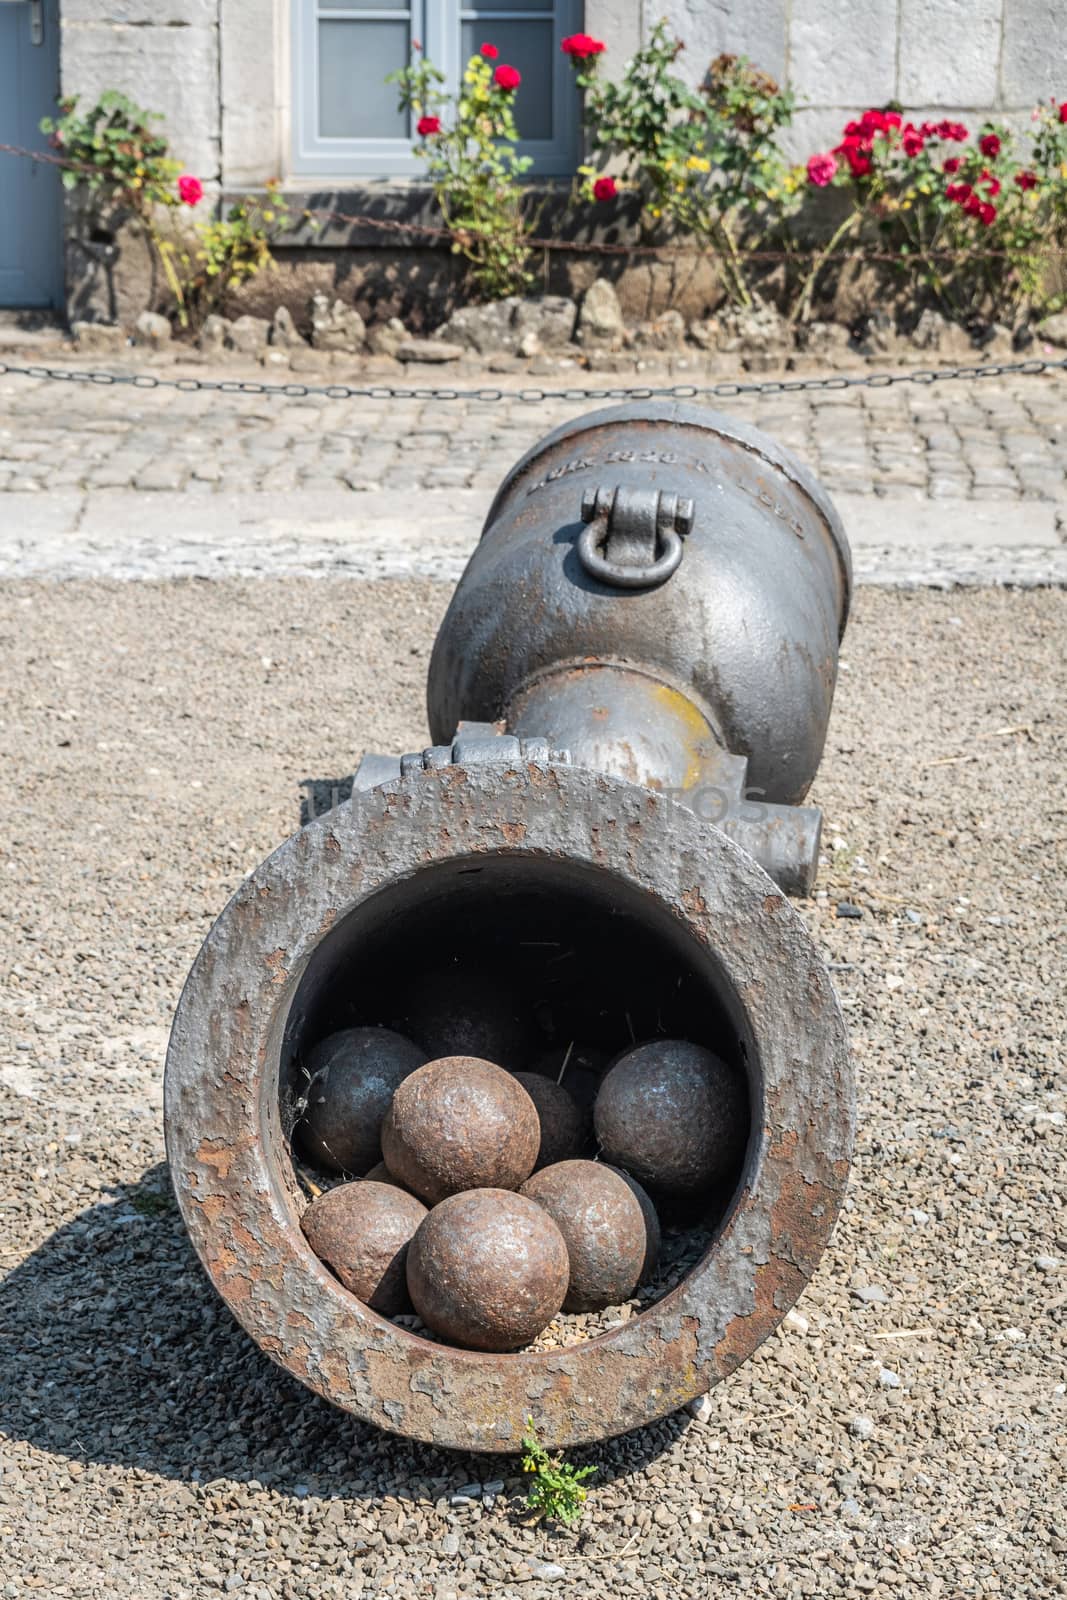 Cannon balls in artillery gun in Dinant, Belgium. by Claudine